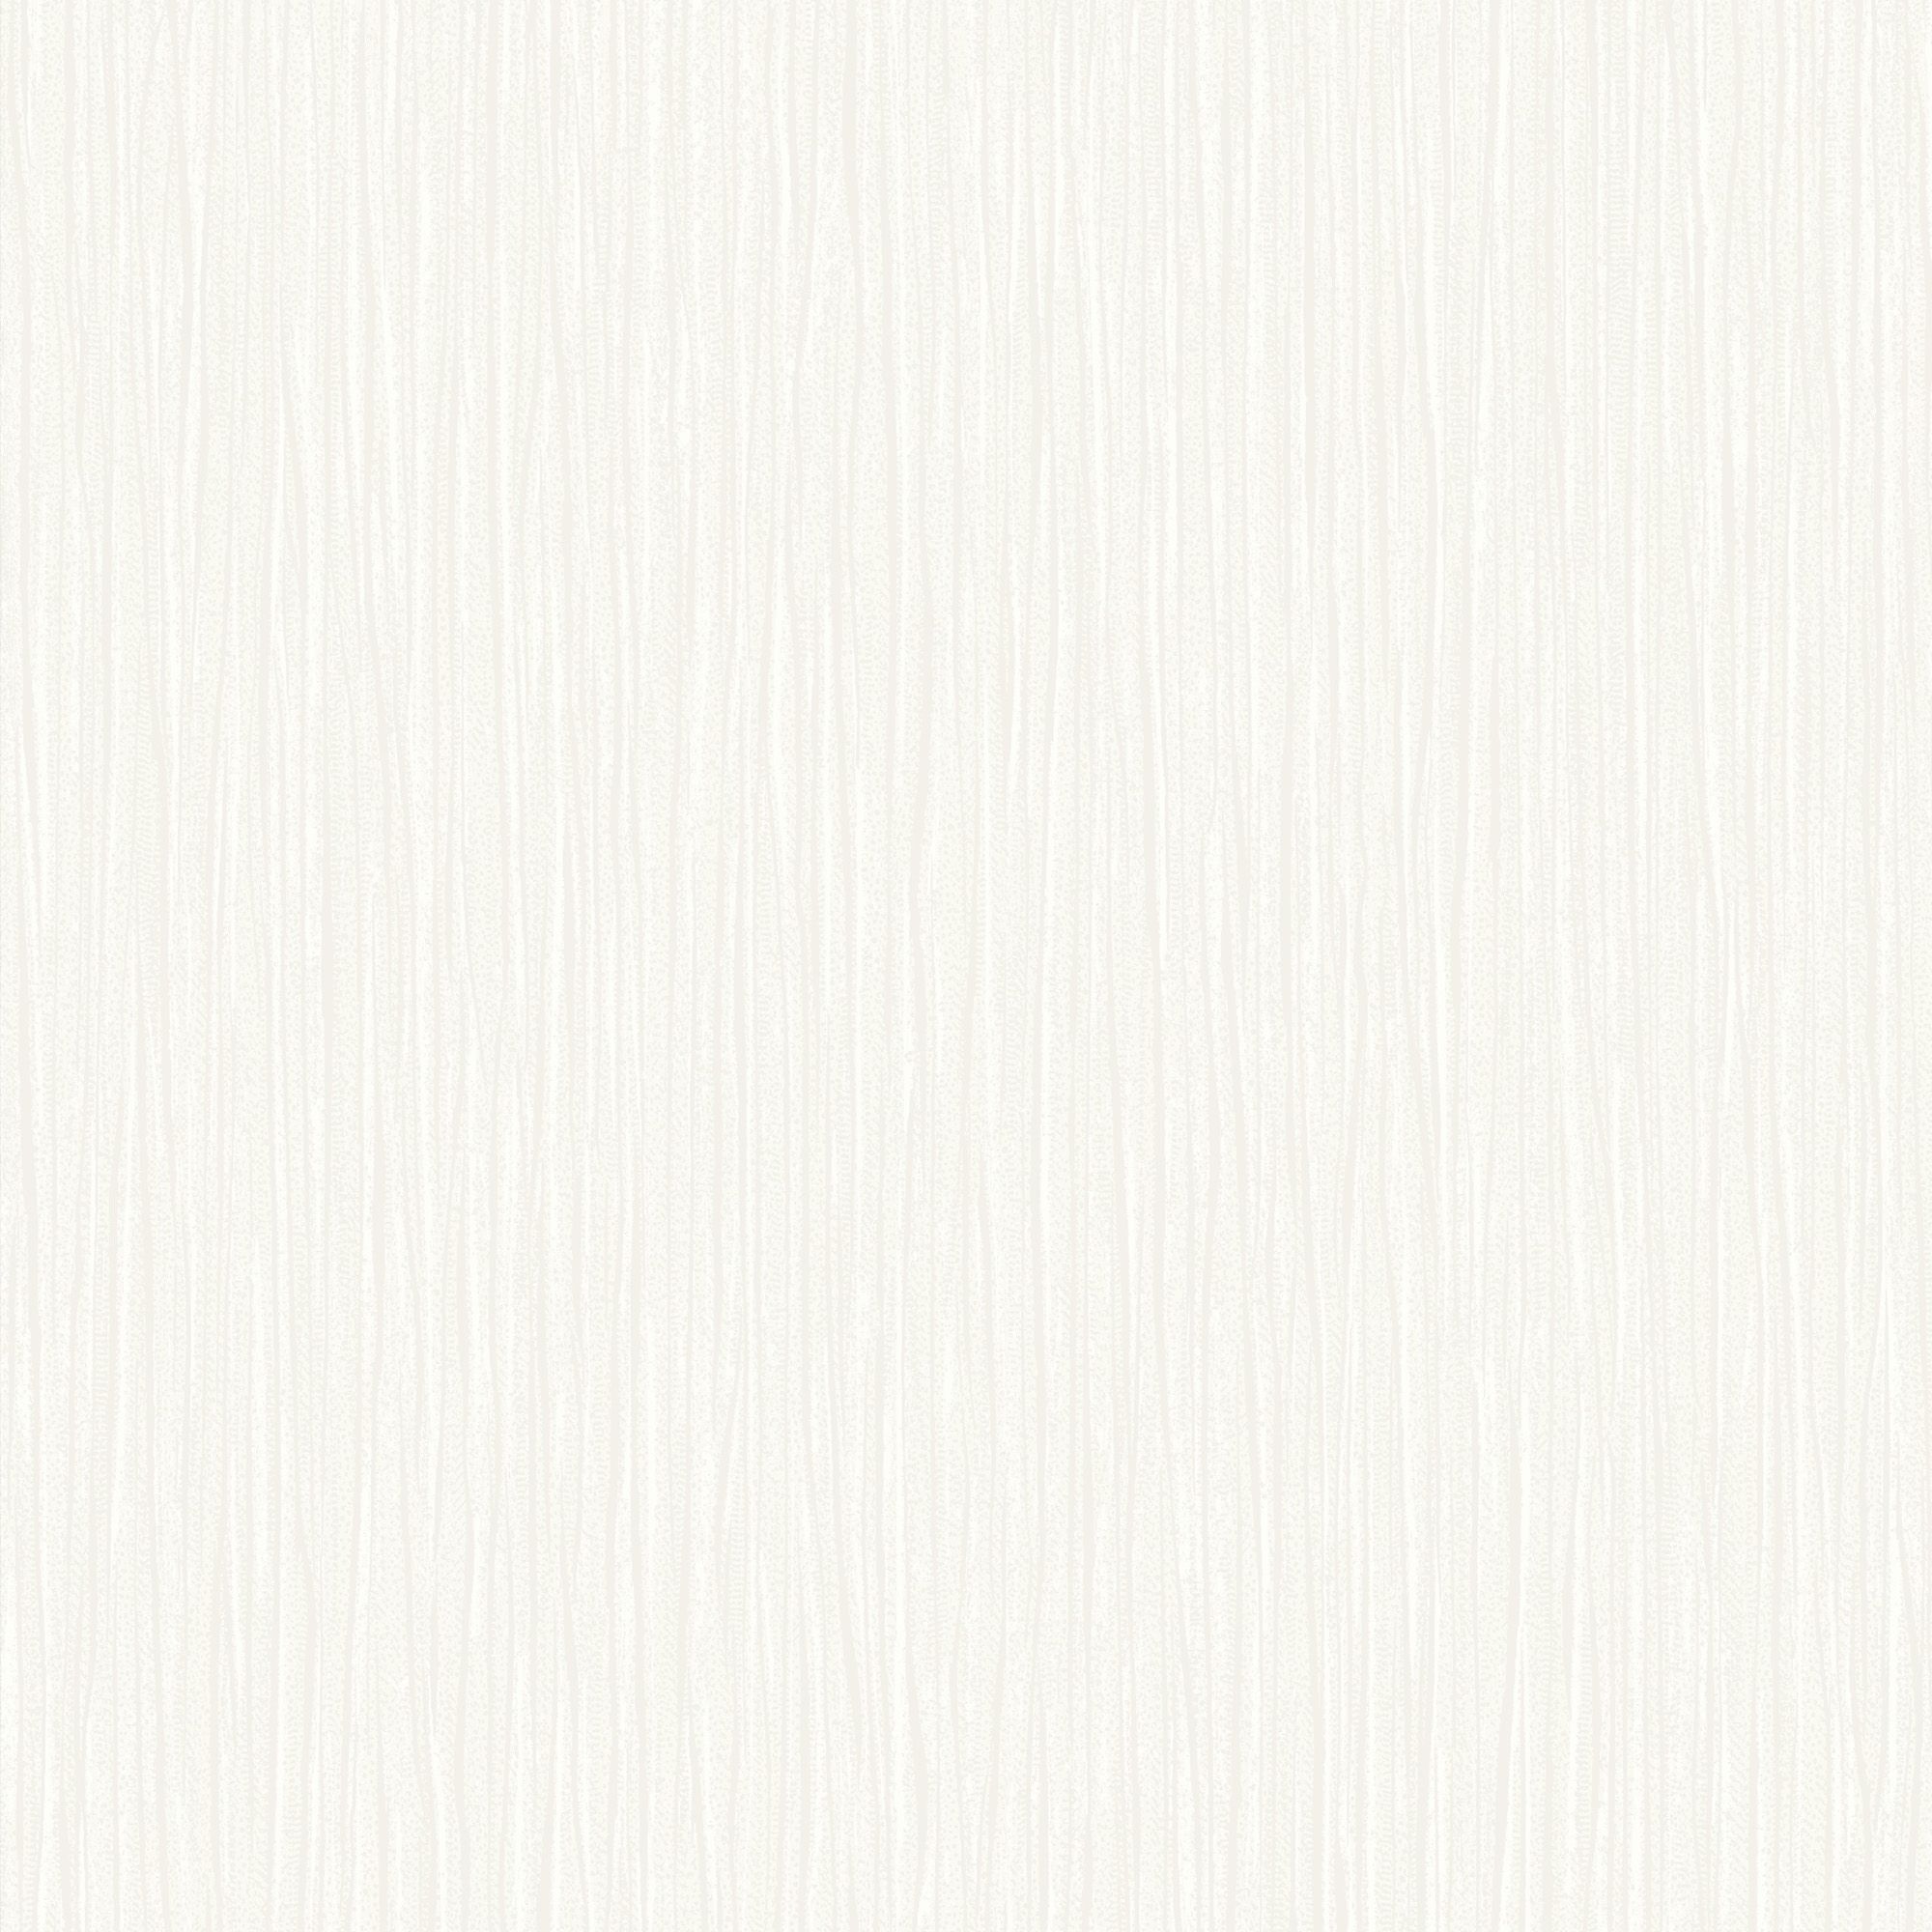 GoodHome Truyes White Wood grain Glitter effect Textured Wallpaper Sample